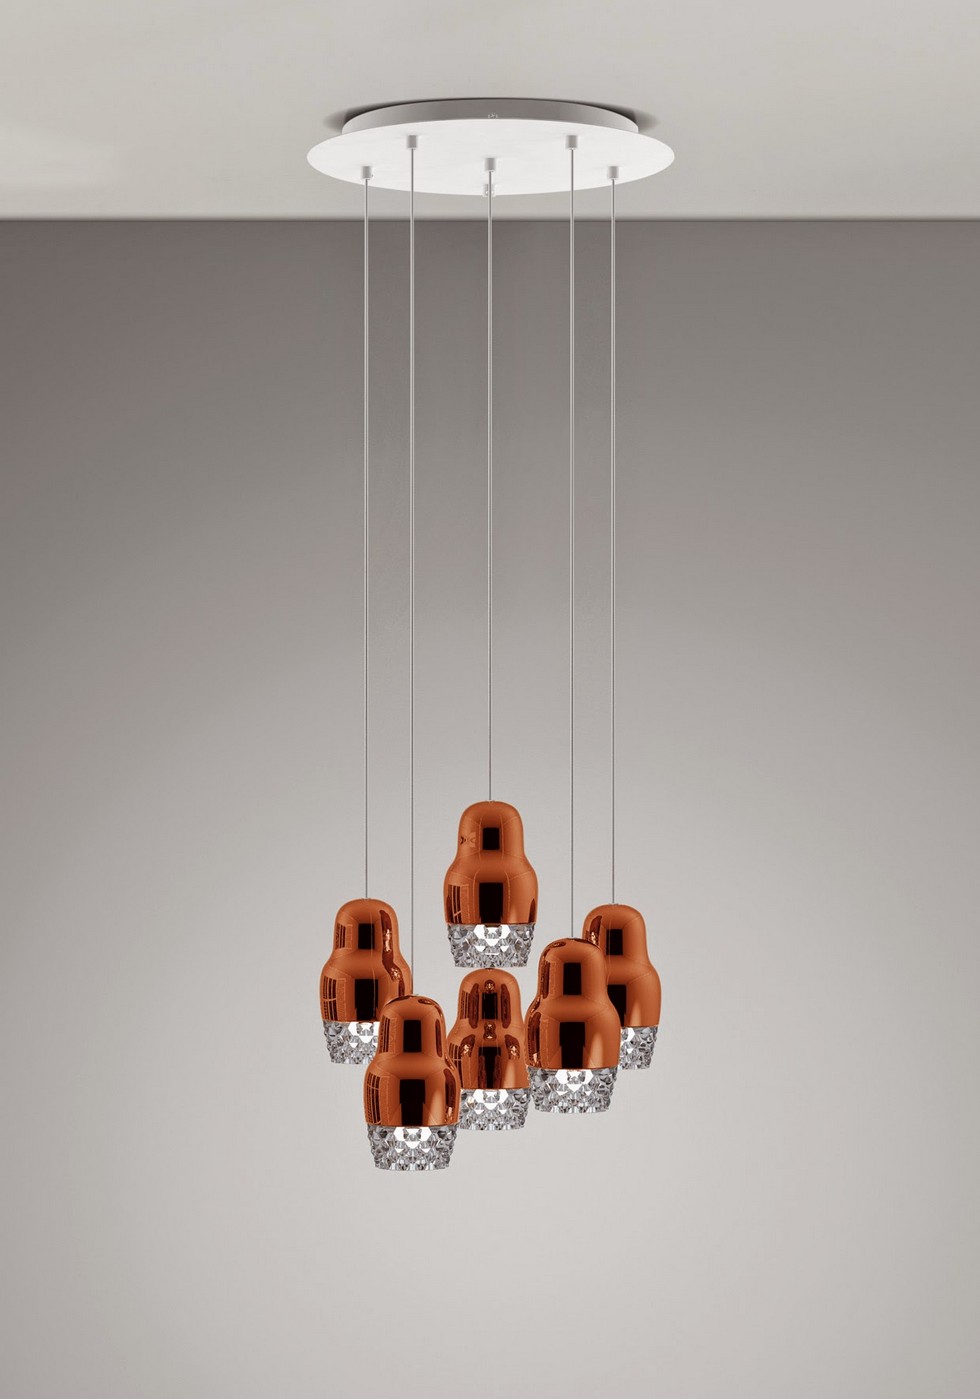 Milan Furniture Fair 2015 contemporary lighting trends to remember-AxoLight at Euroluce 2015 (10)